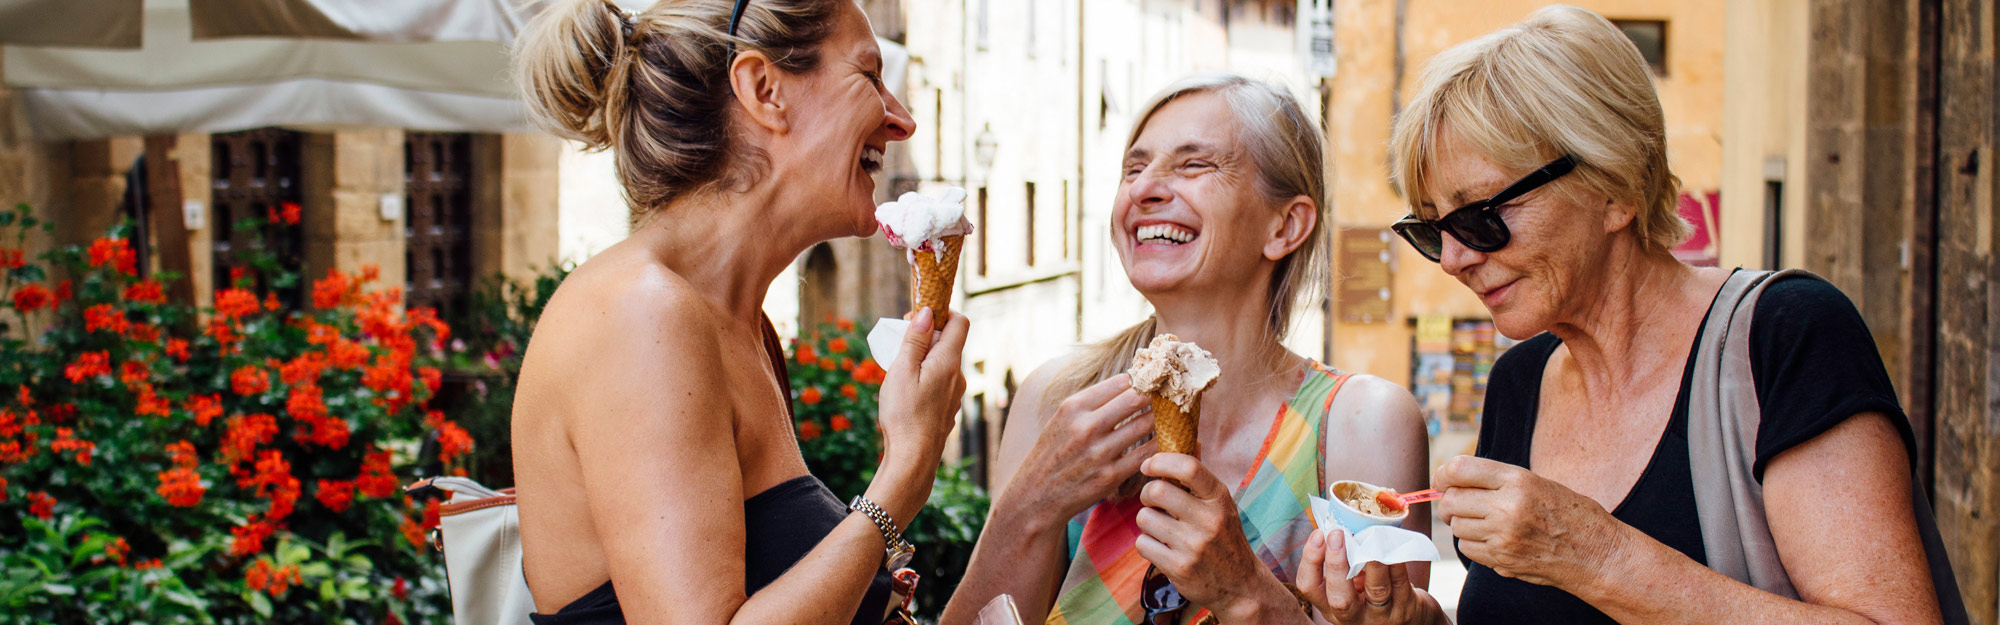 Three happy women eating icecream in town.